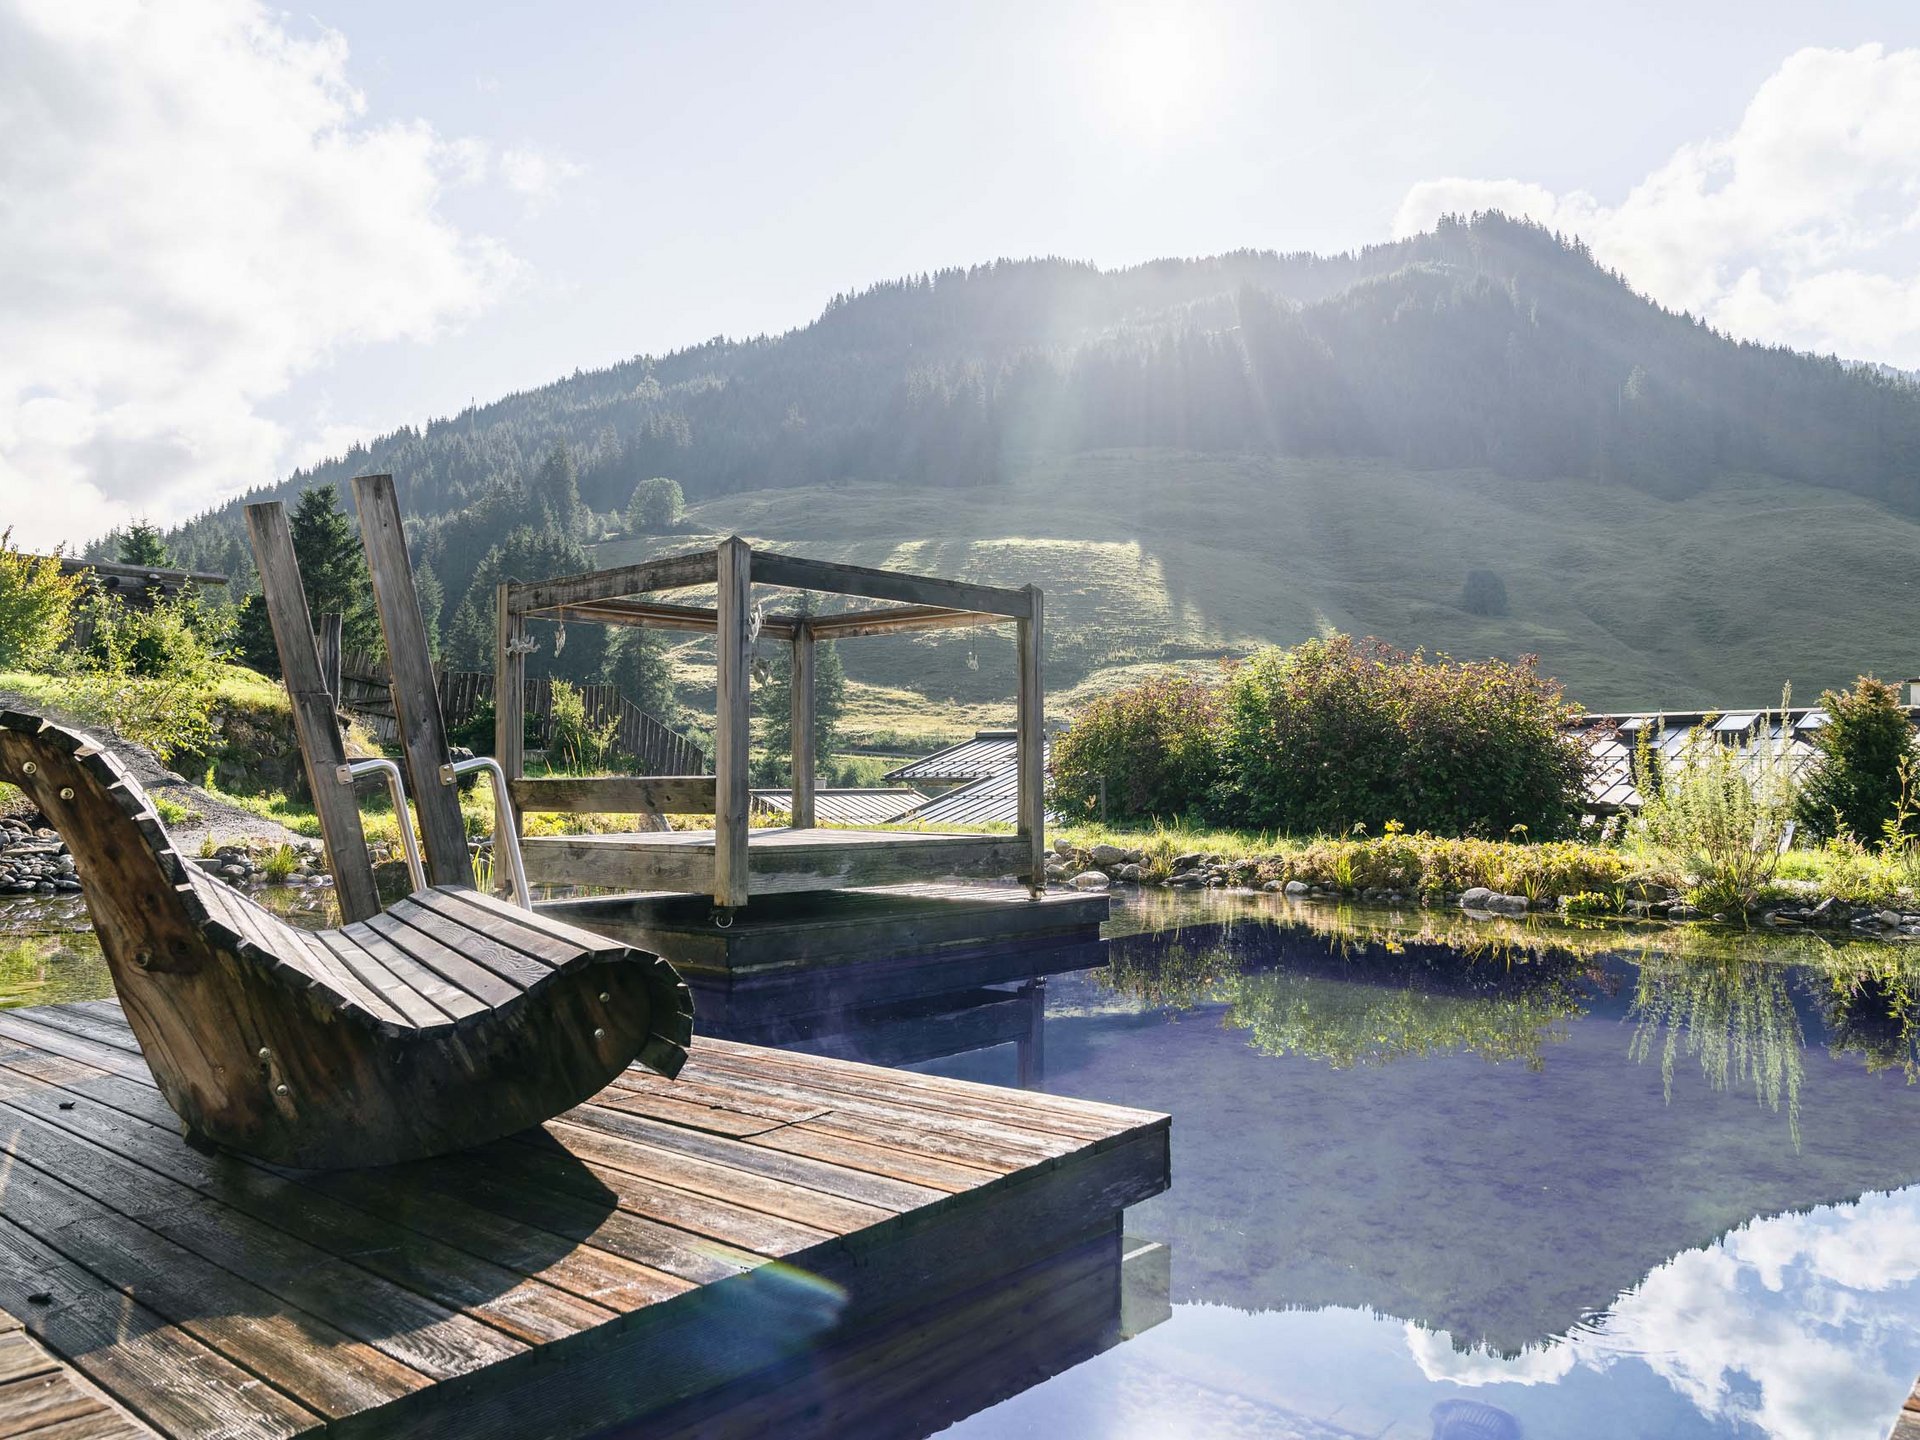 Unter den Biohotels in Tirol die beste Wahl: der Grubachhof